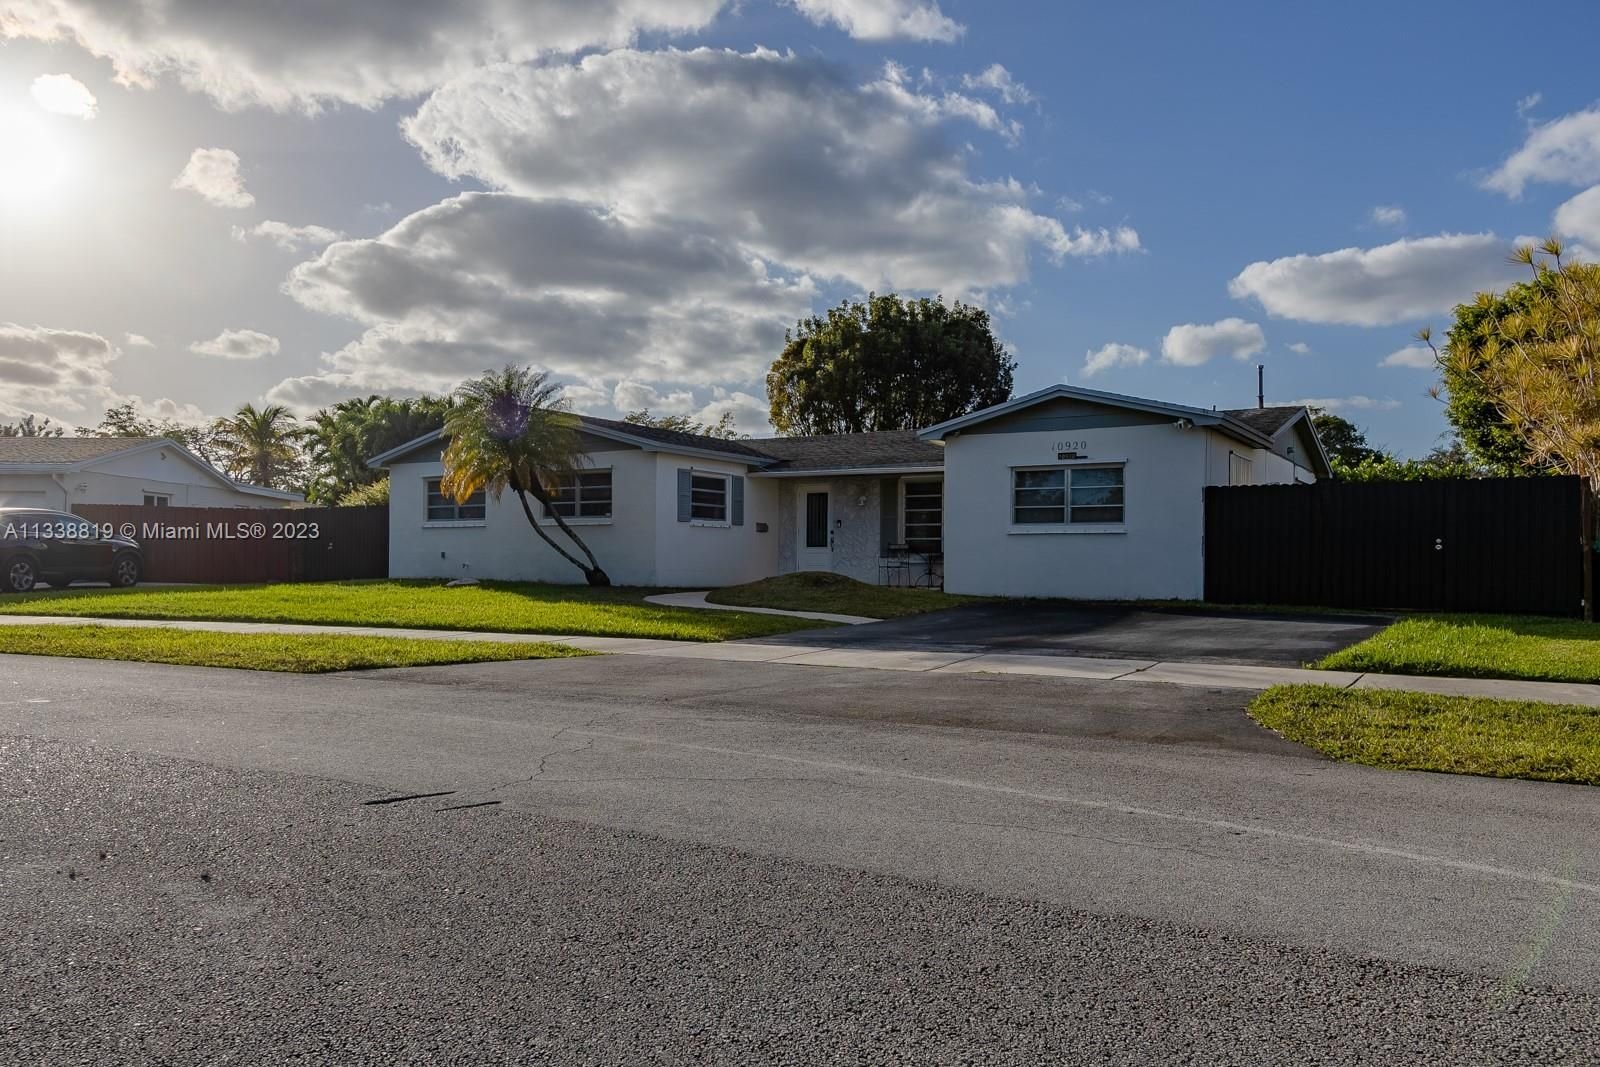 Real estate property located at 10920 105th Ave, Miami-Dade County, Miami, FL